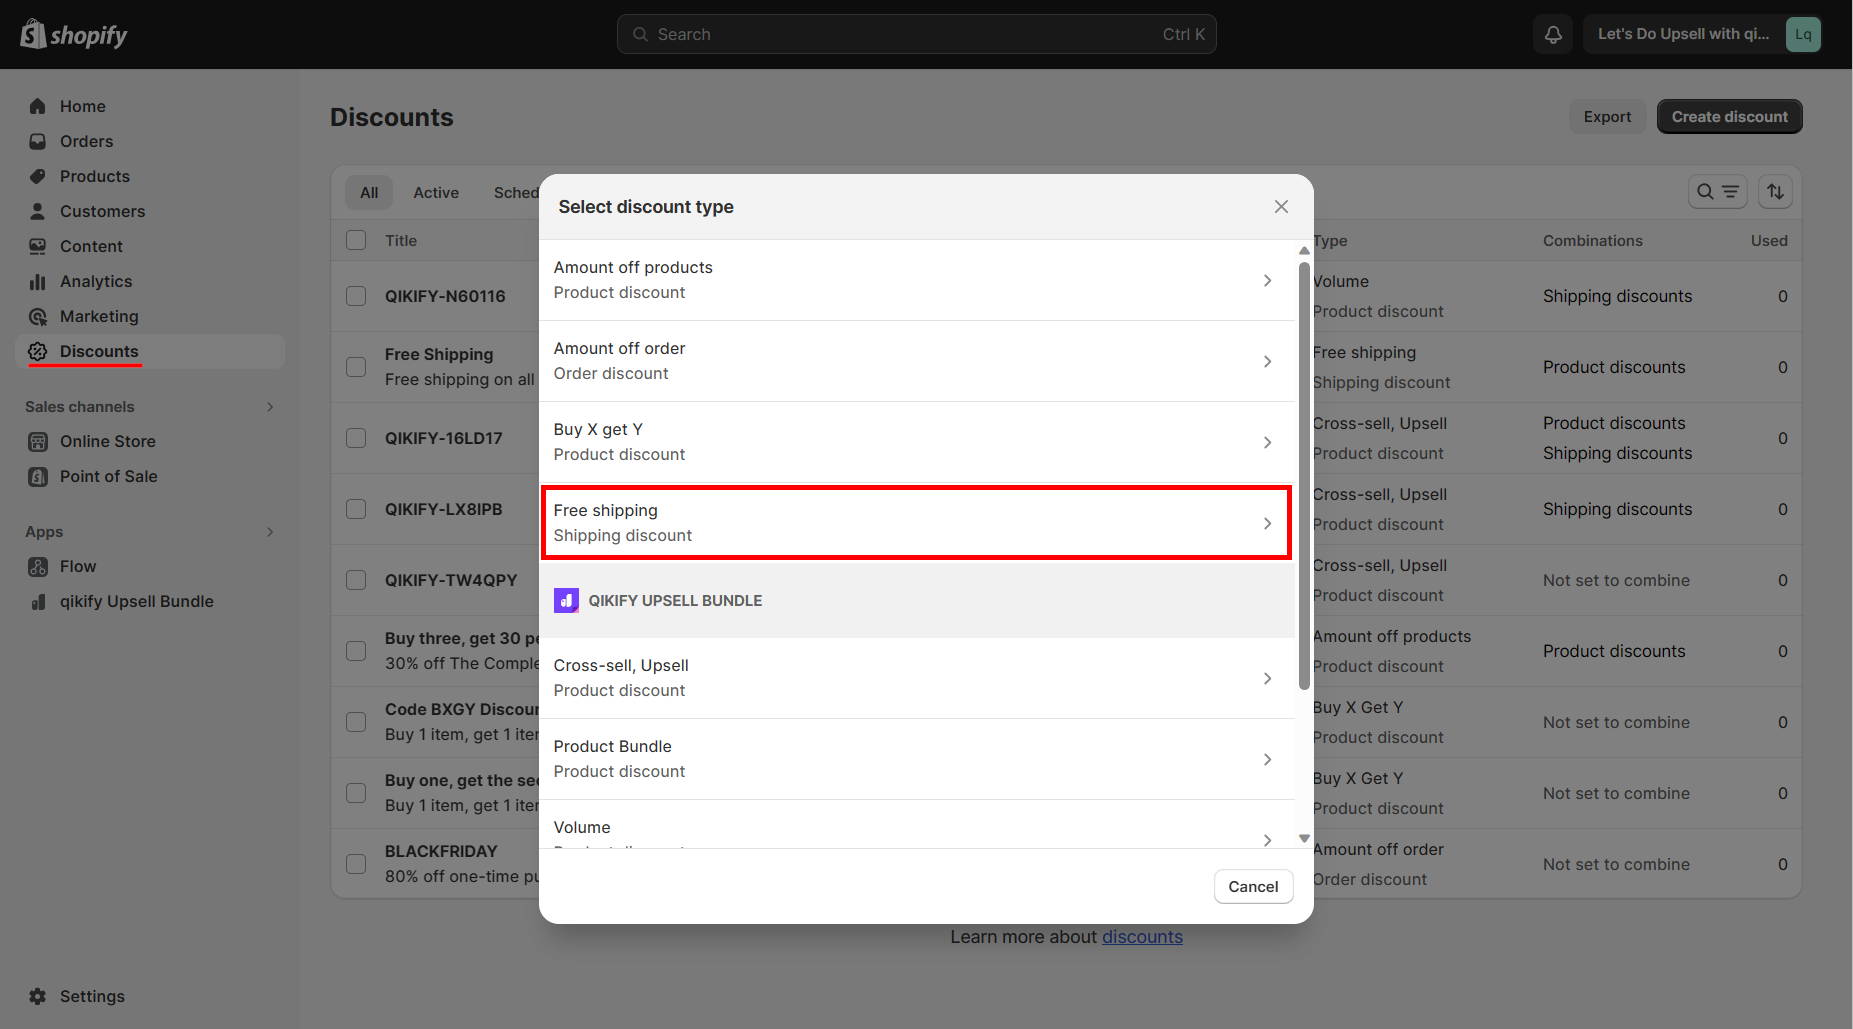 qikify checkout customizer app dashboard - shopify checkout customization app